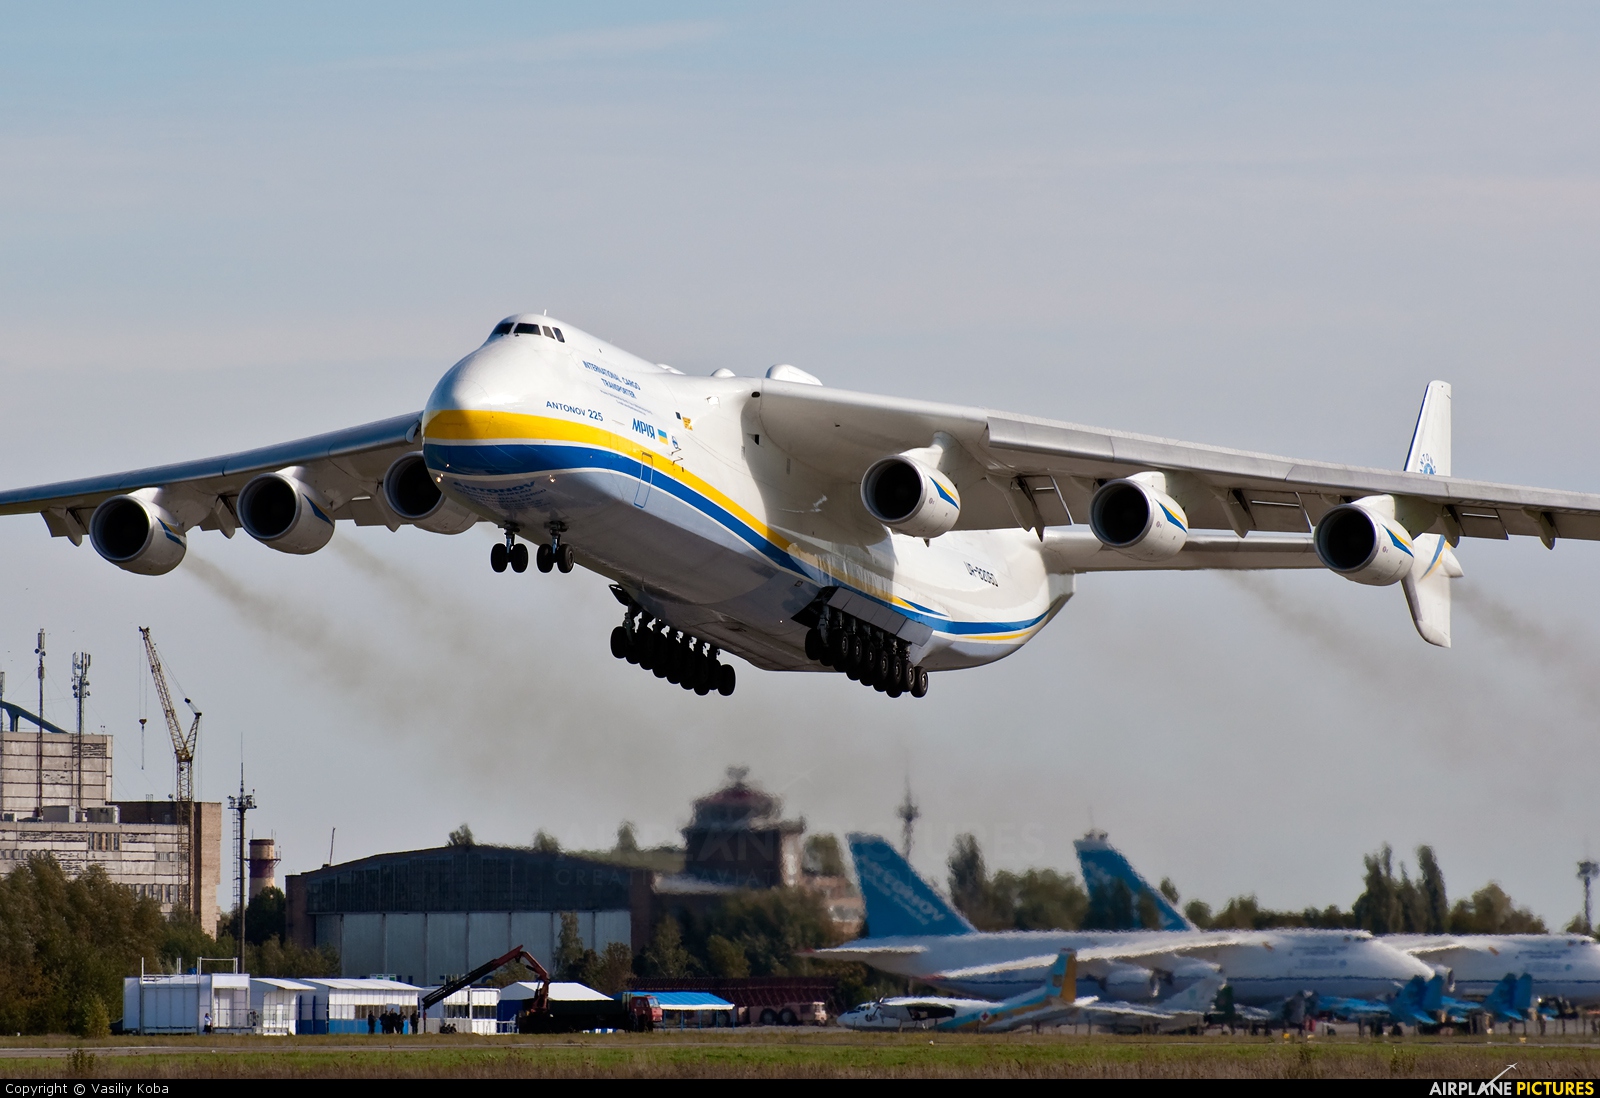 Amazing Antonov An-225 Mriya Pictures & Backgrounds